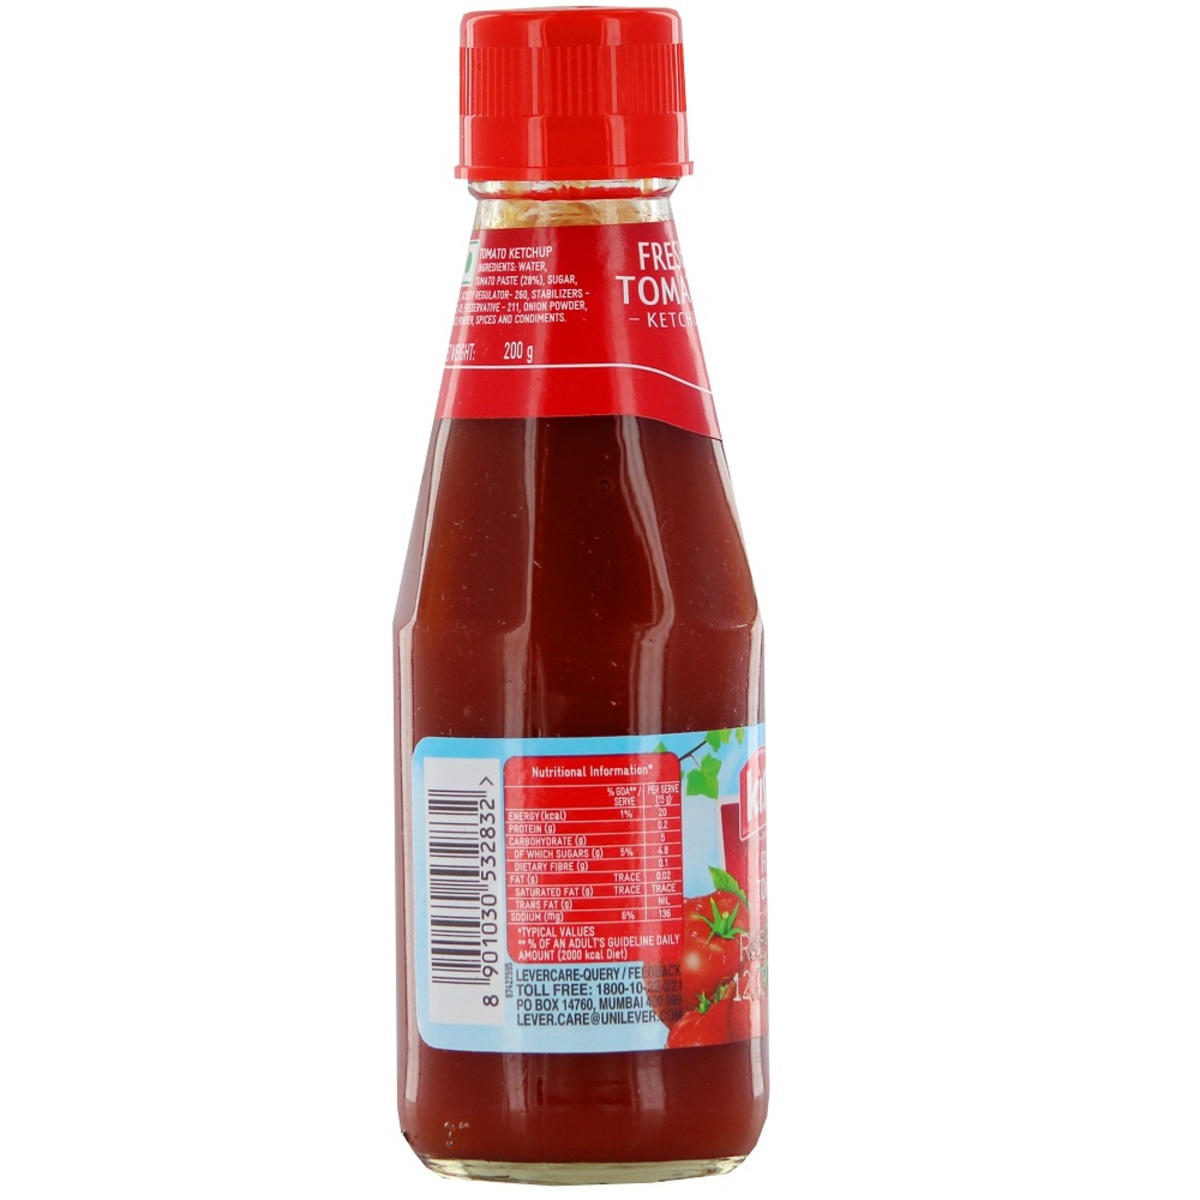 Kissan Fresh Tomato Ketchup 200g